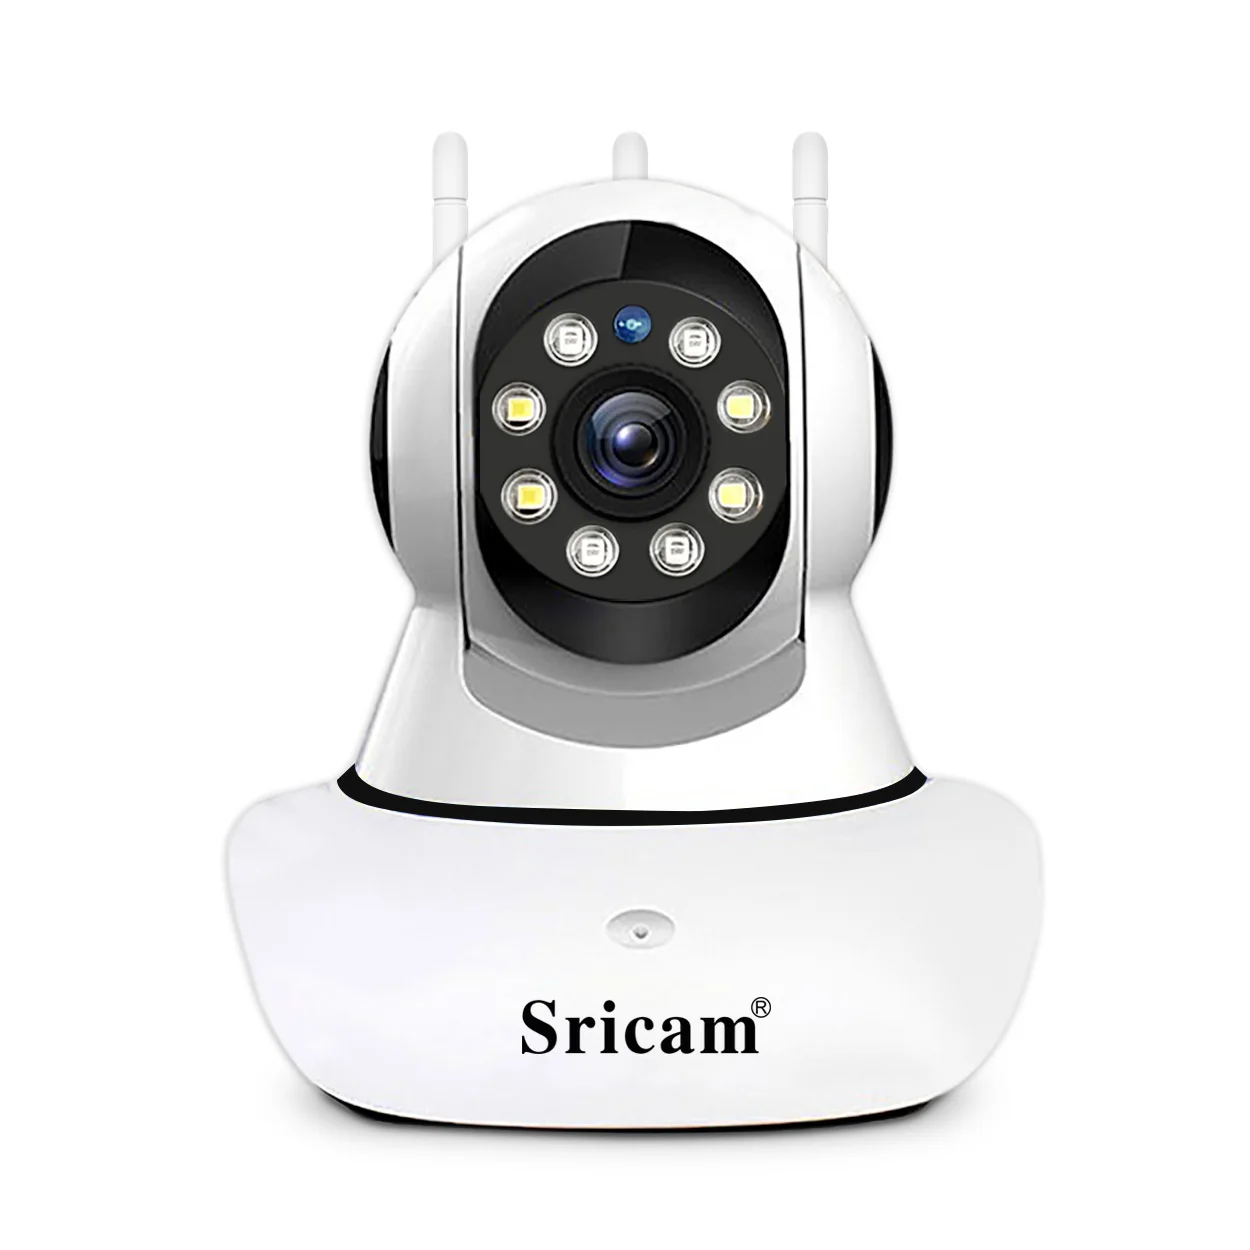 Sricam sh030 WLAN Wireless IP Camera 1296p SECURITY CAMERA HD NETWORK CCTV 32gb 